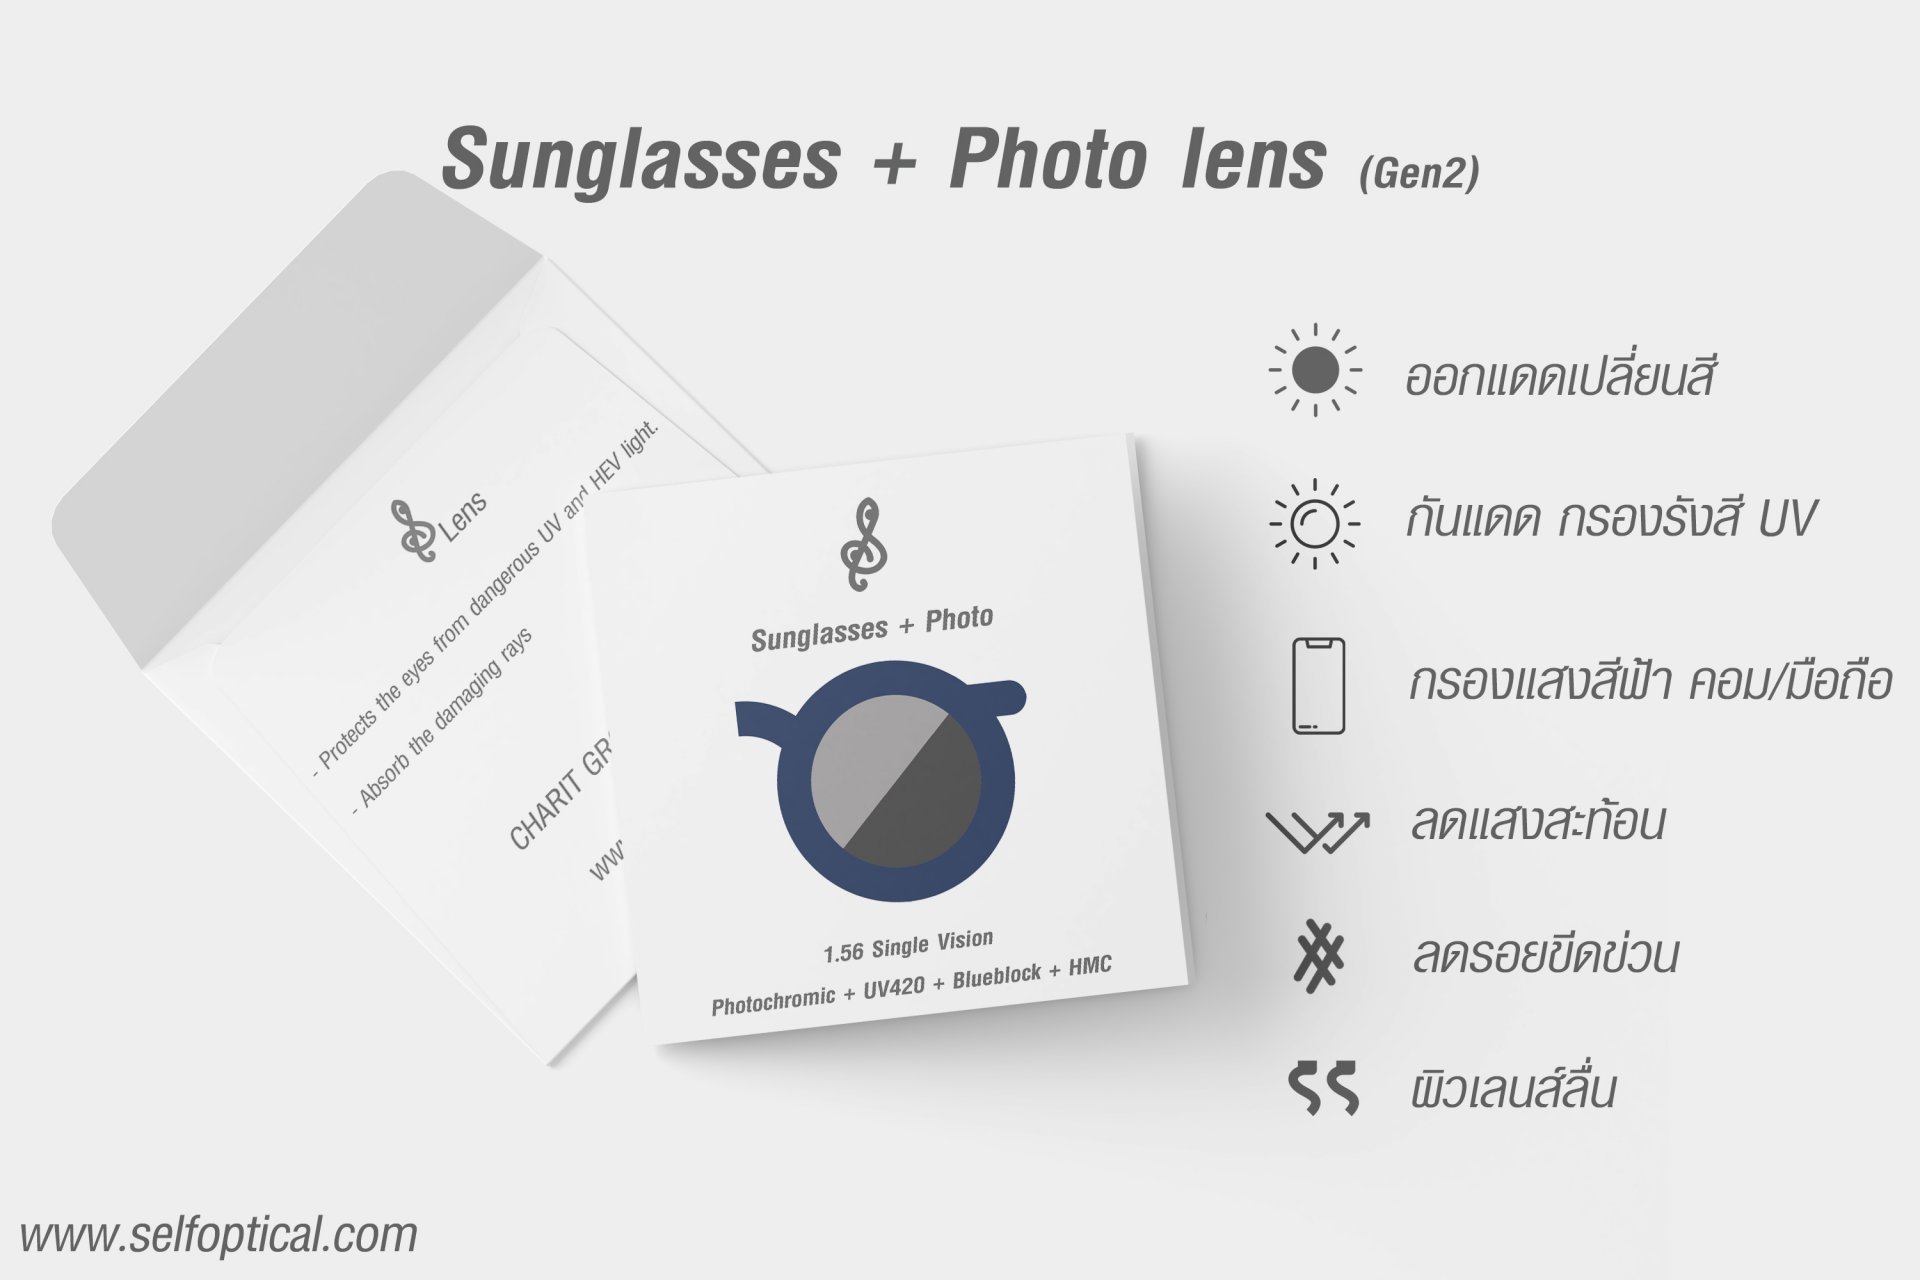 Sunglasses + Photo Lens